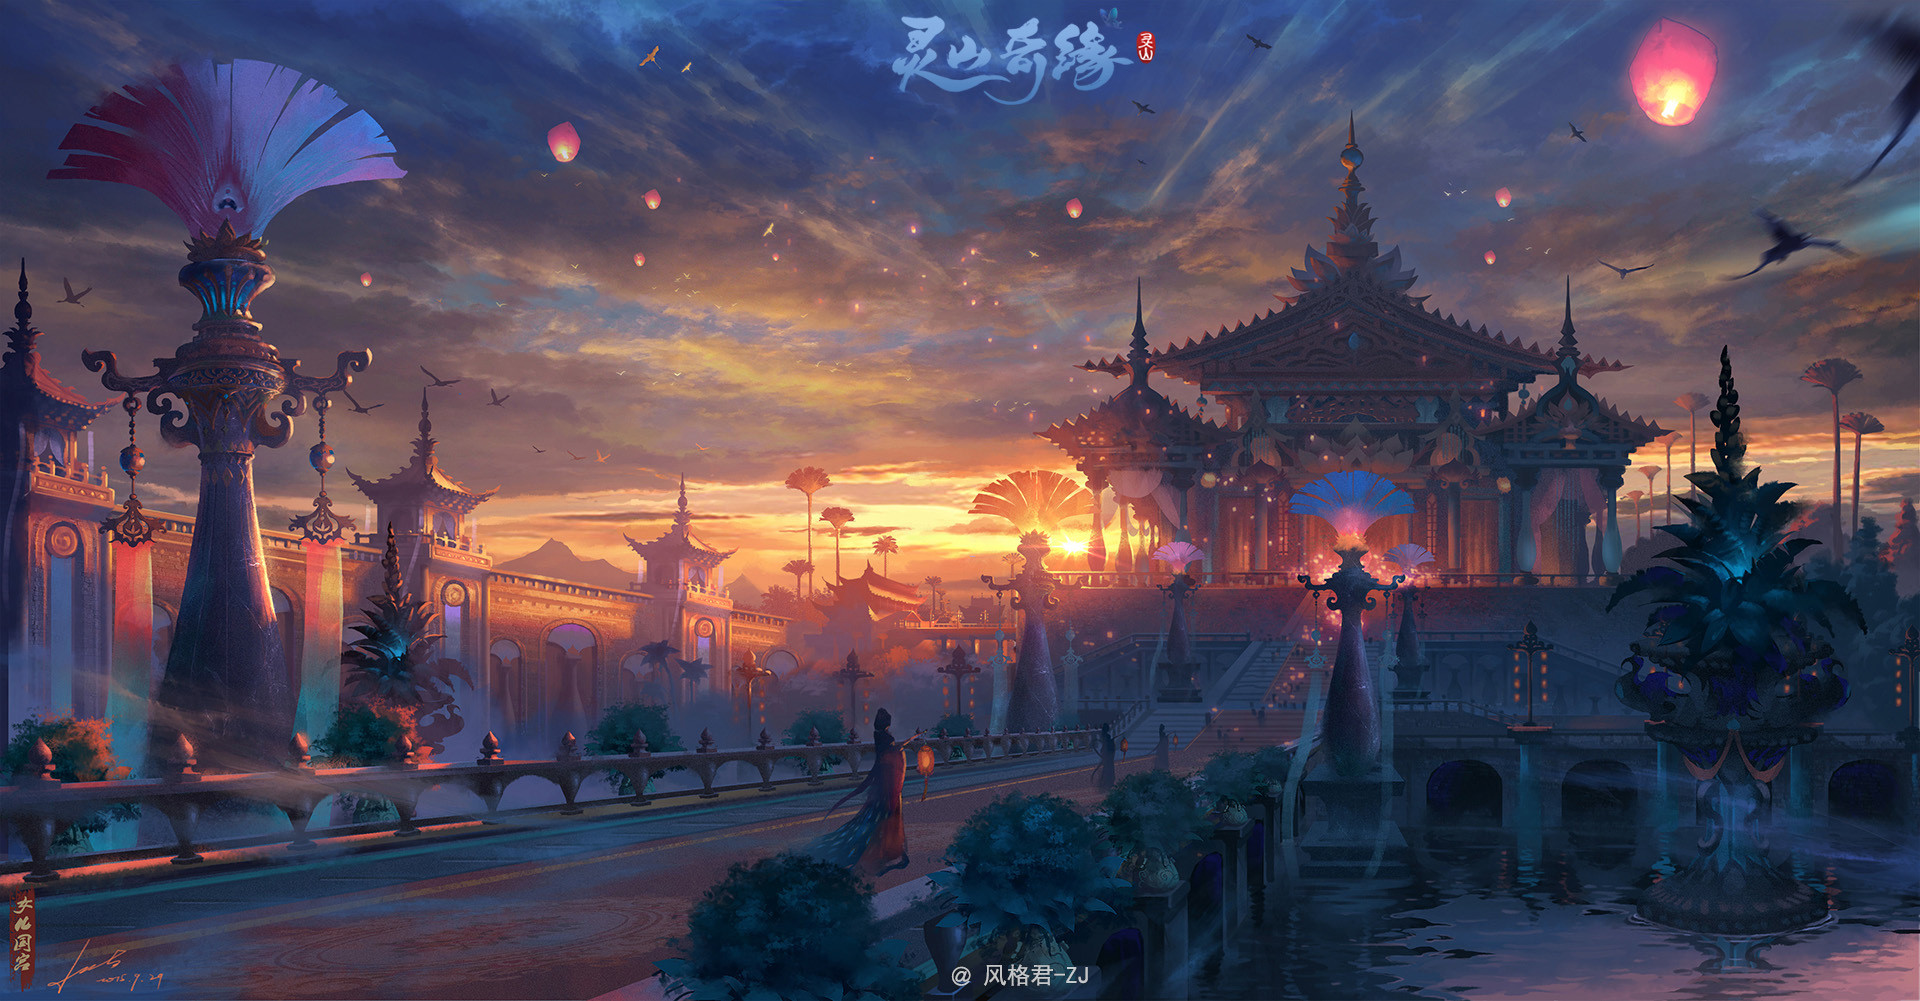 General 1920x1001 Jun Zhang fantasy art digital art Asian architecture landscape sunset sunrise birds